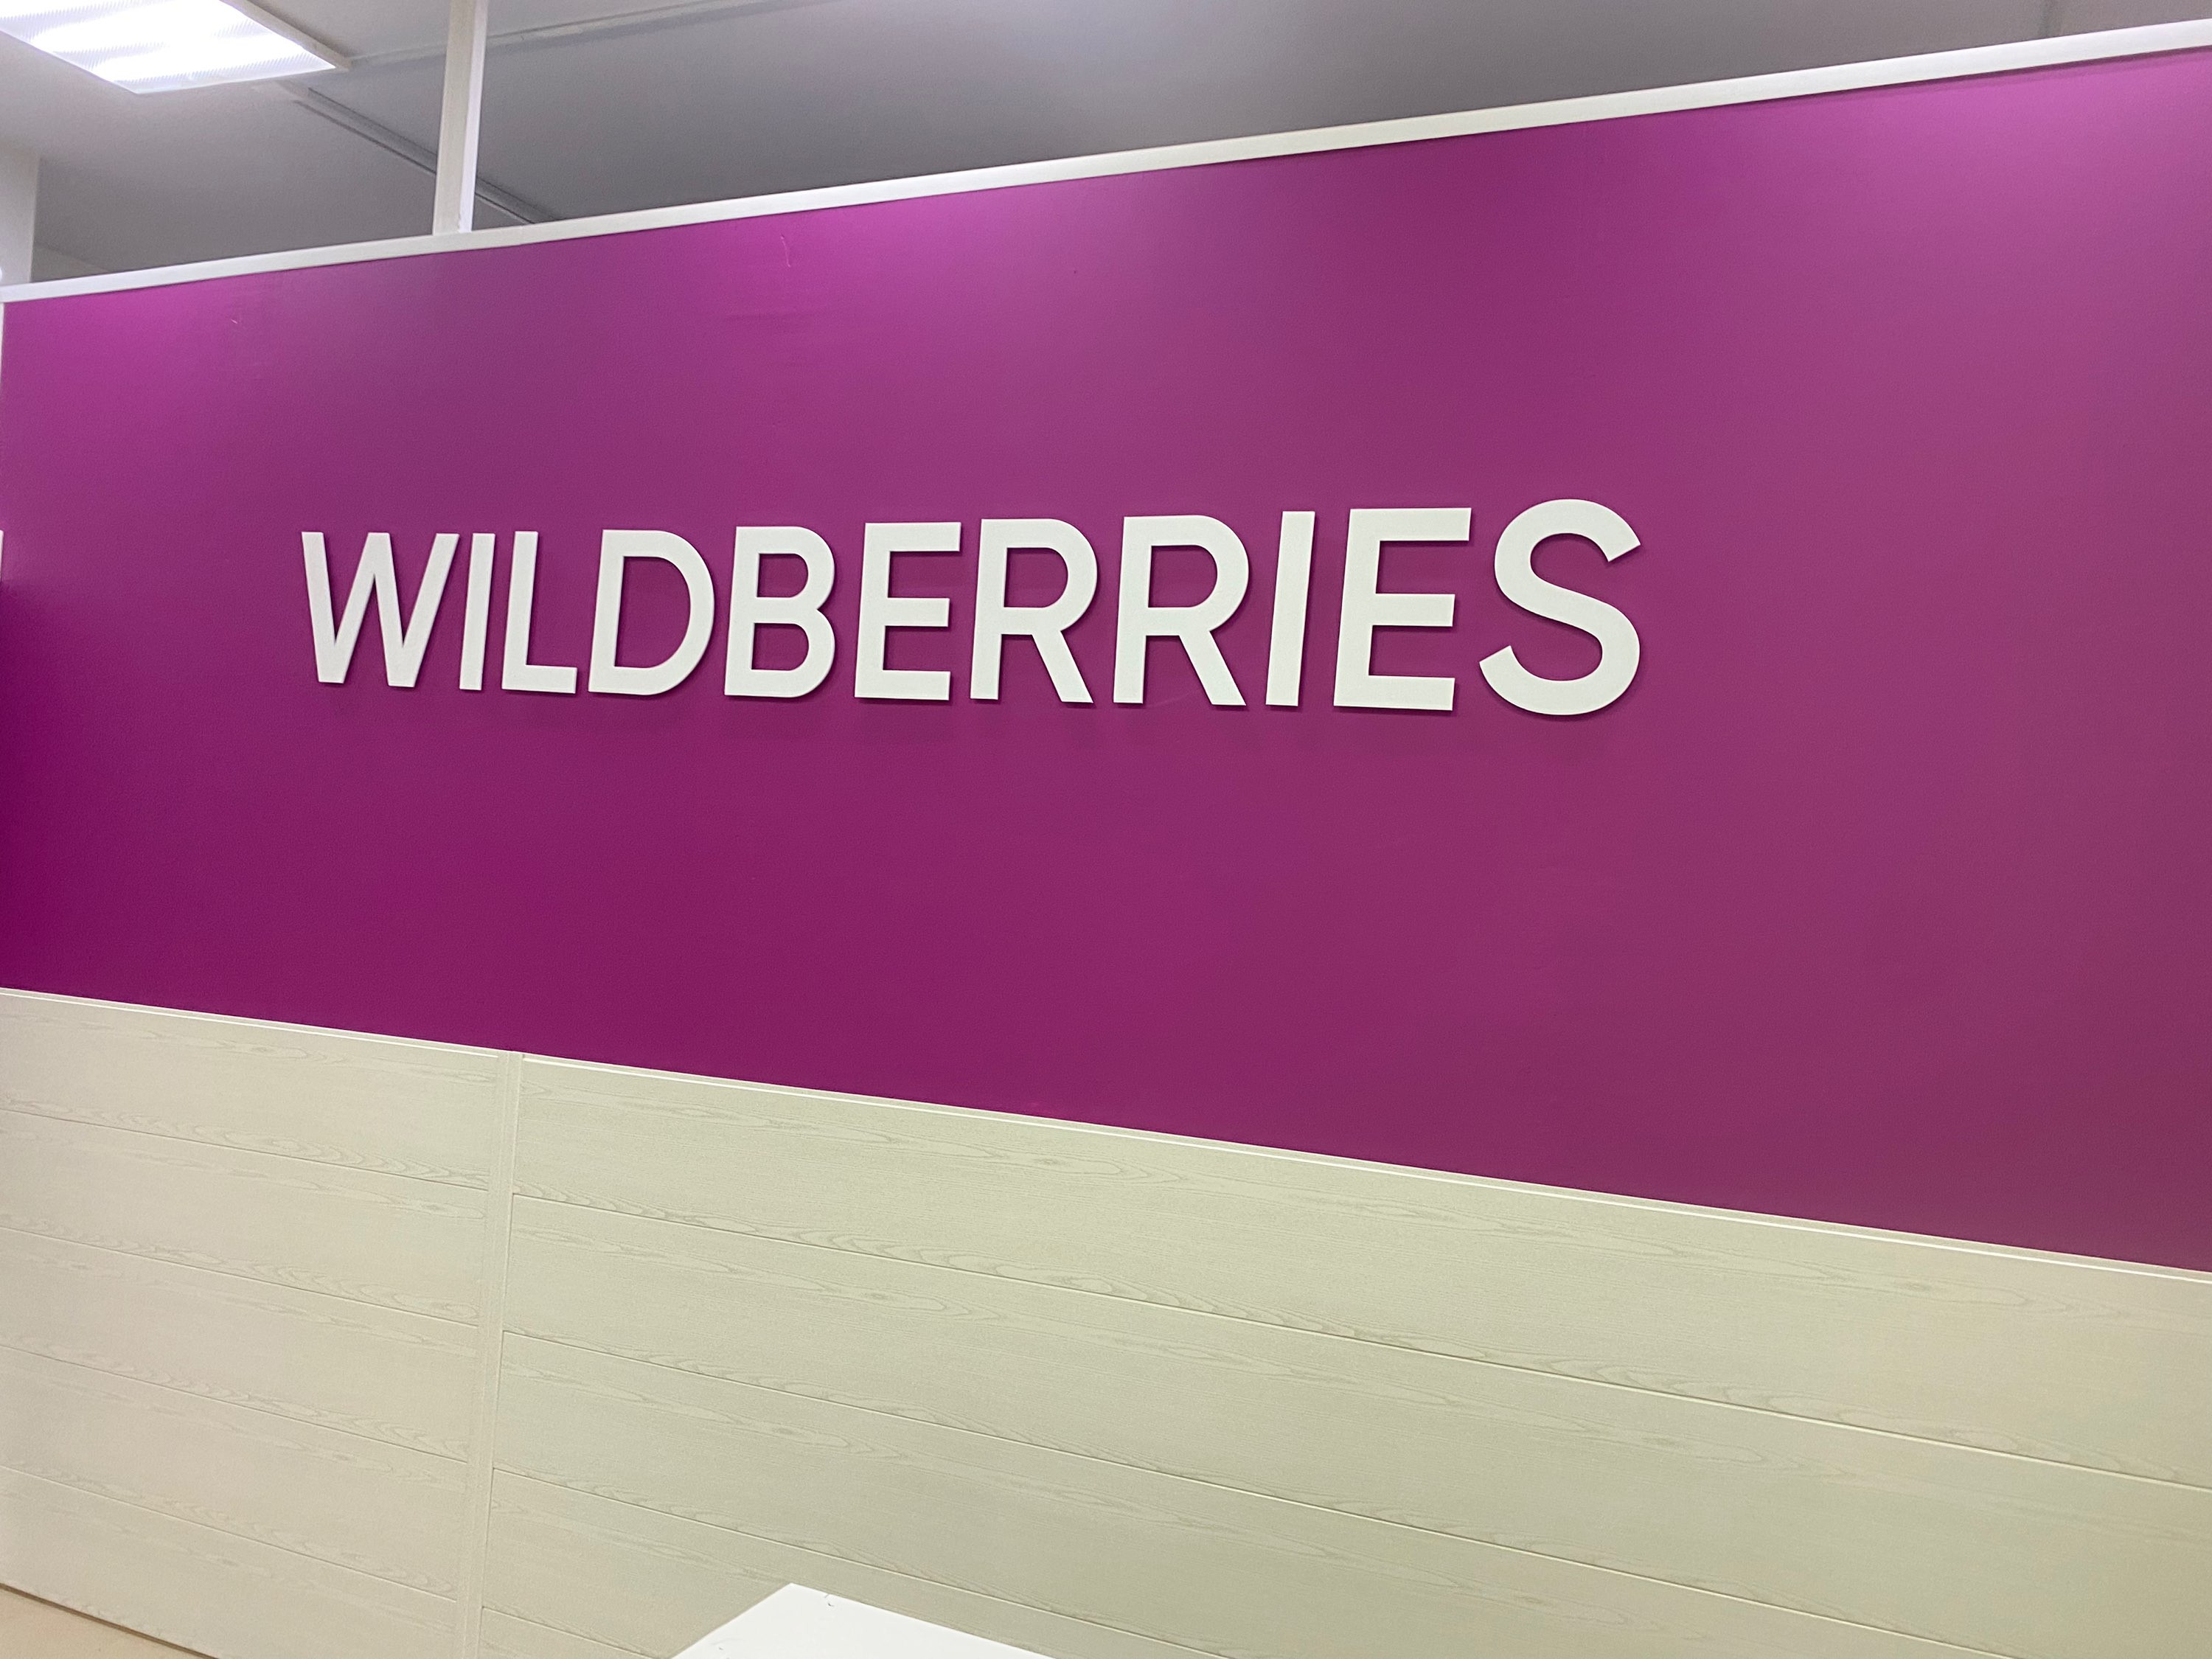 Wildberries 1 интернет магазины. Wildberries. Wildberries интернет-магазин Владивосток. Картинка магазин Wildberries. Вайлдберриз Озон.